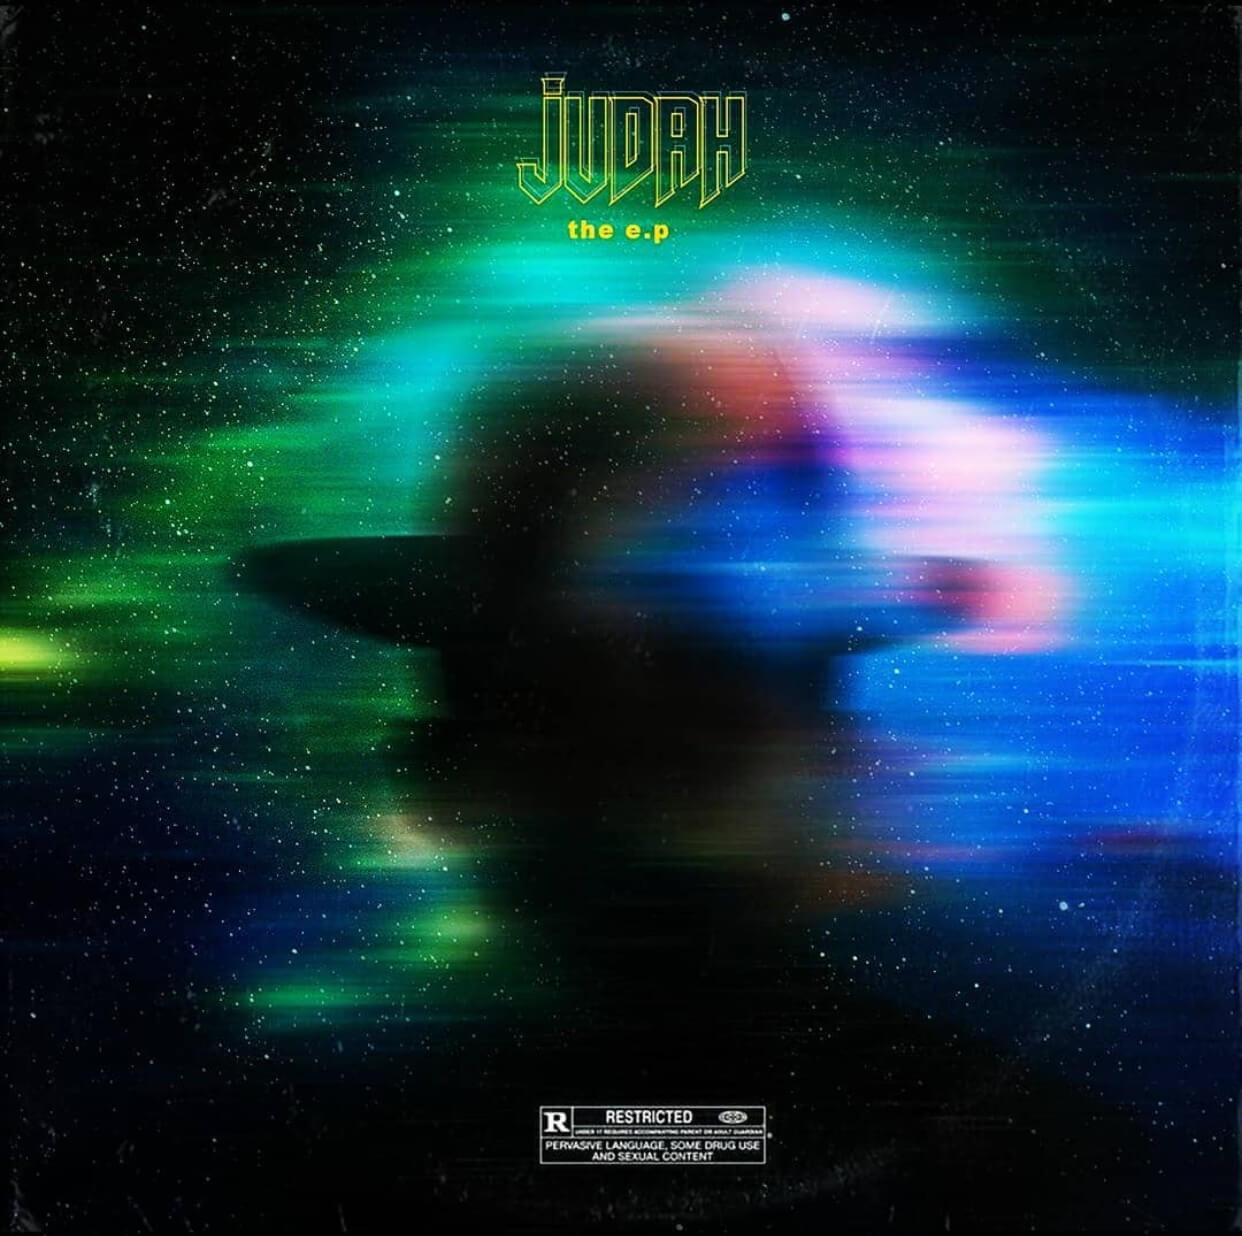 MI Abaga releases new EP titled “Judah”